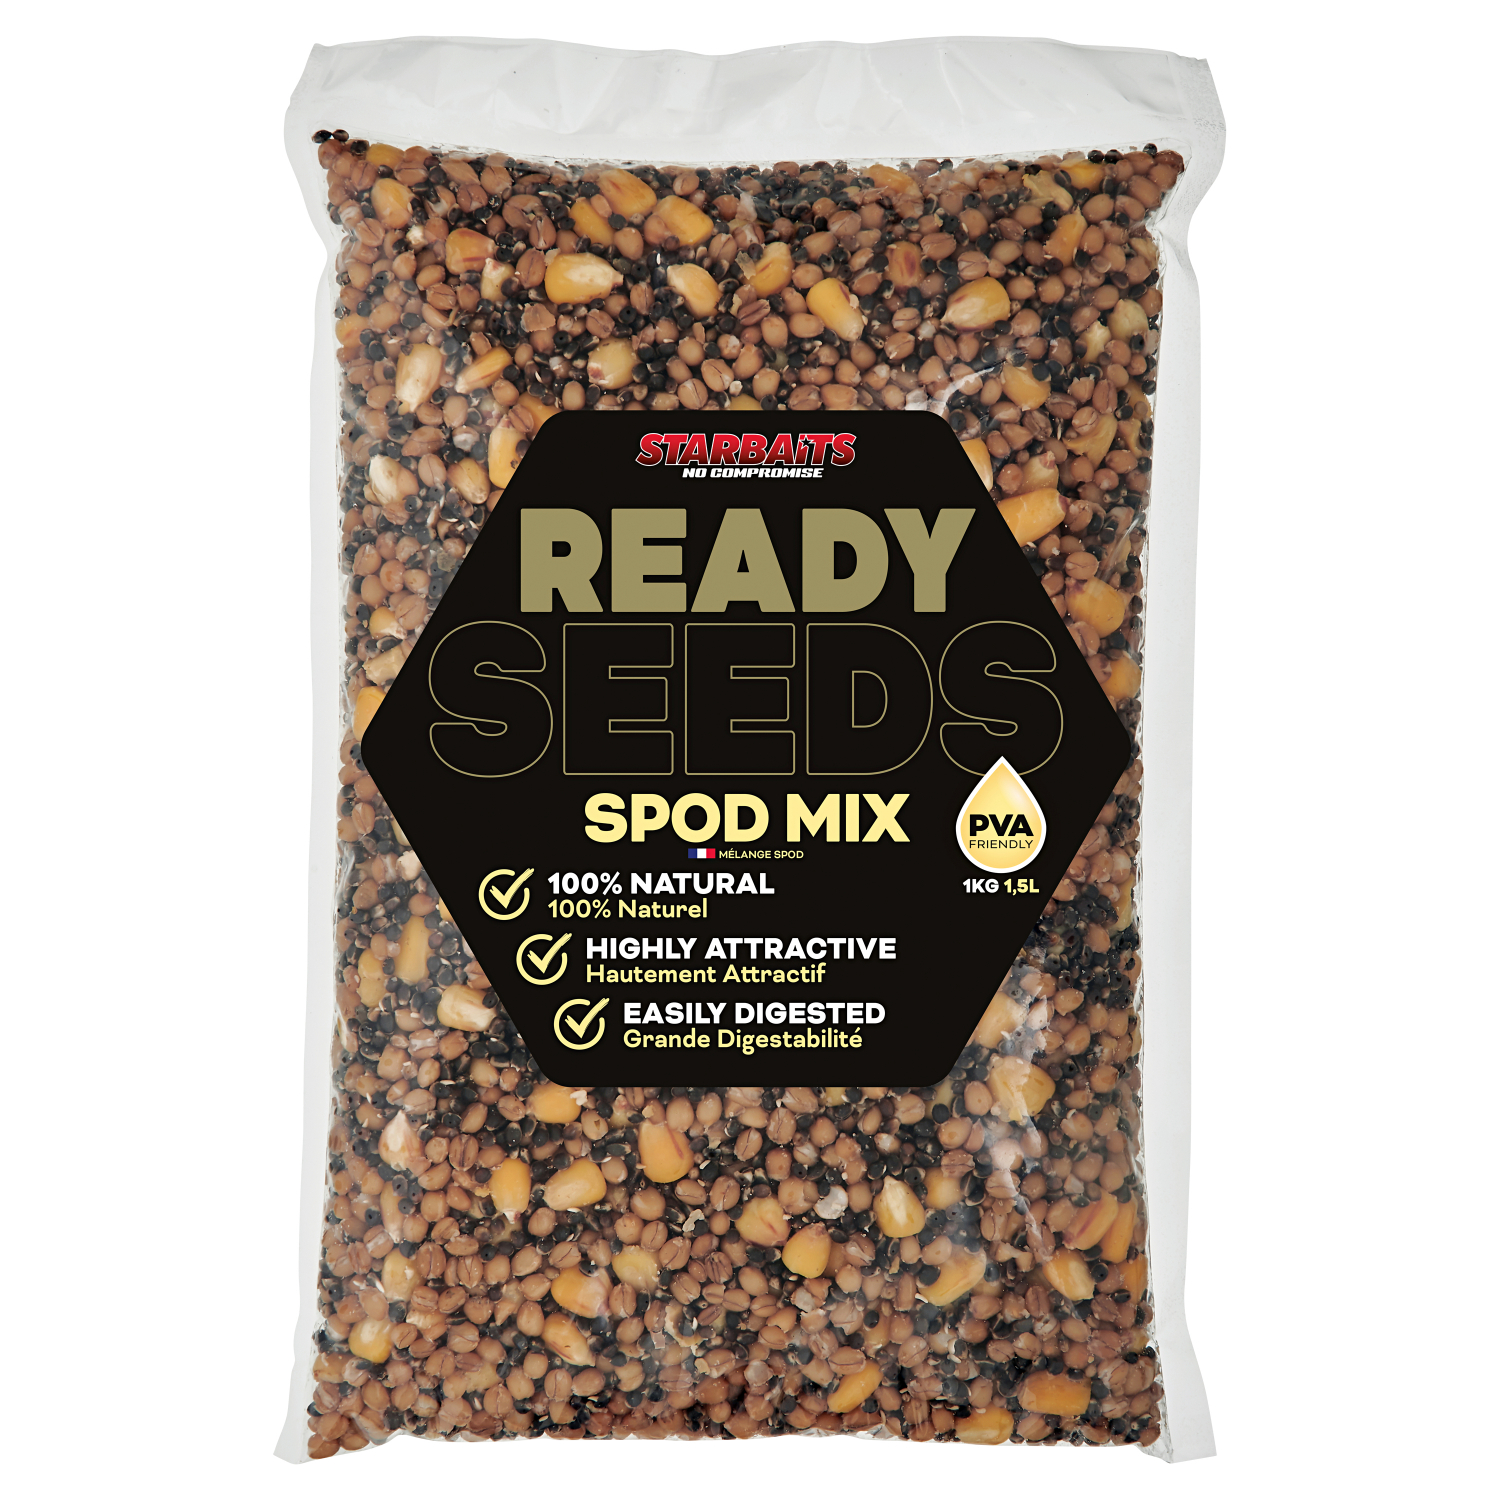 Starbaits Ready Seeds Spod Mix 